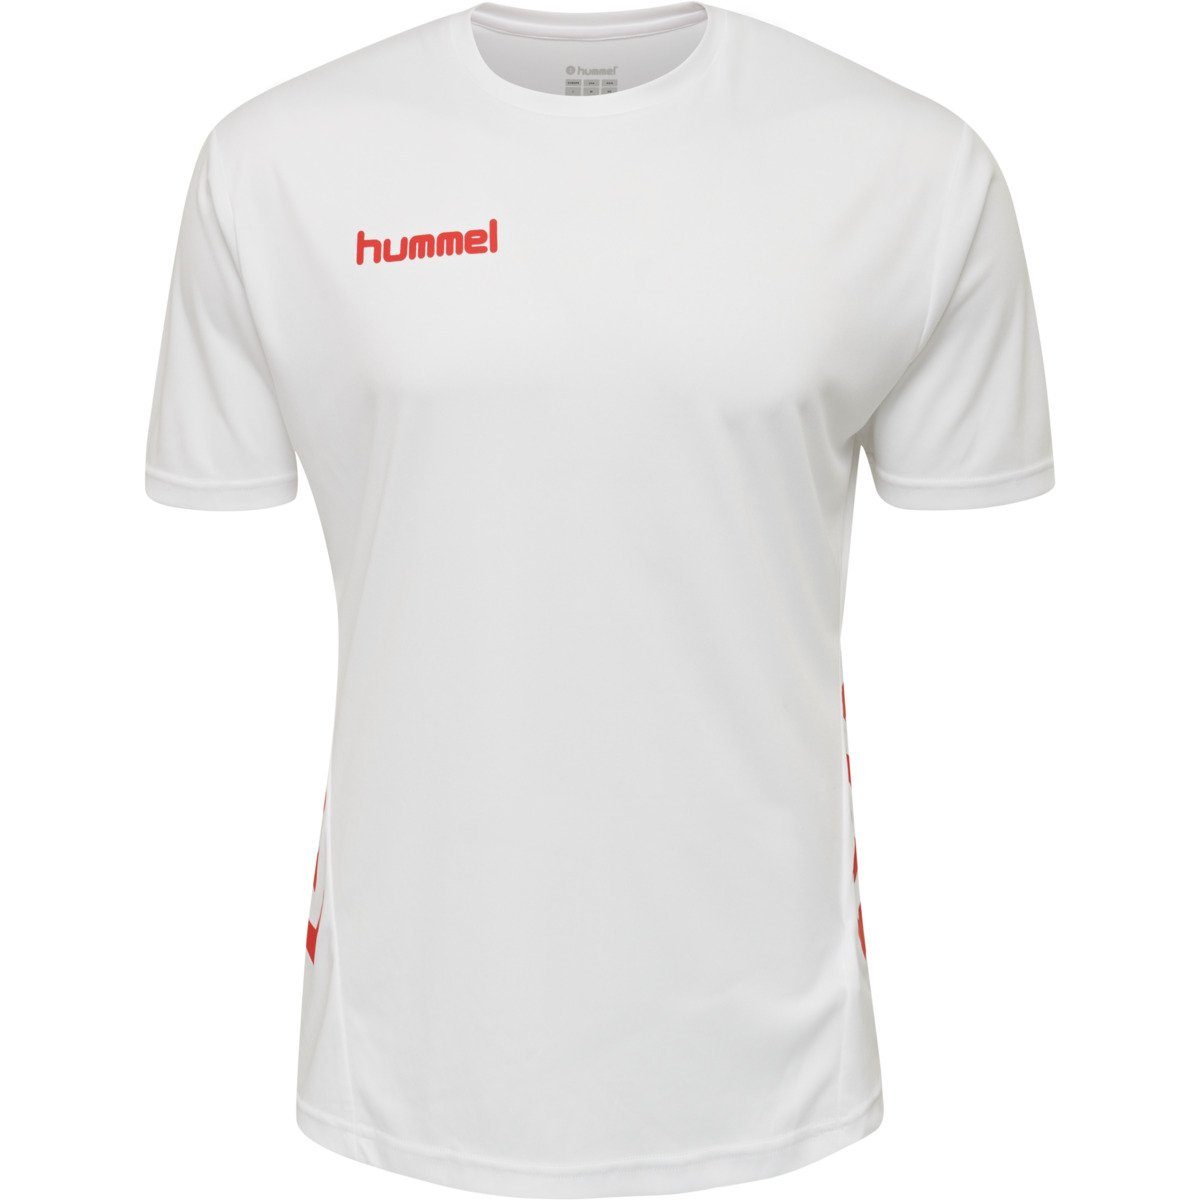 hummel T-Shirt Promo Trikot) 1x RED Jr. Duo Short WHITE/TRUE (Duo Set, Trikotset 1x